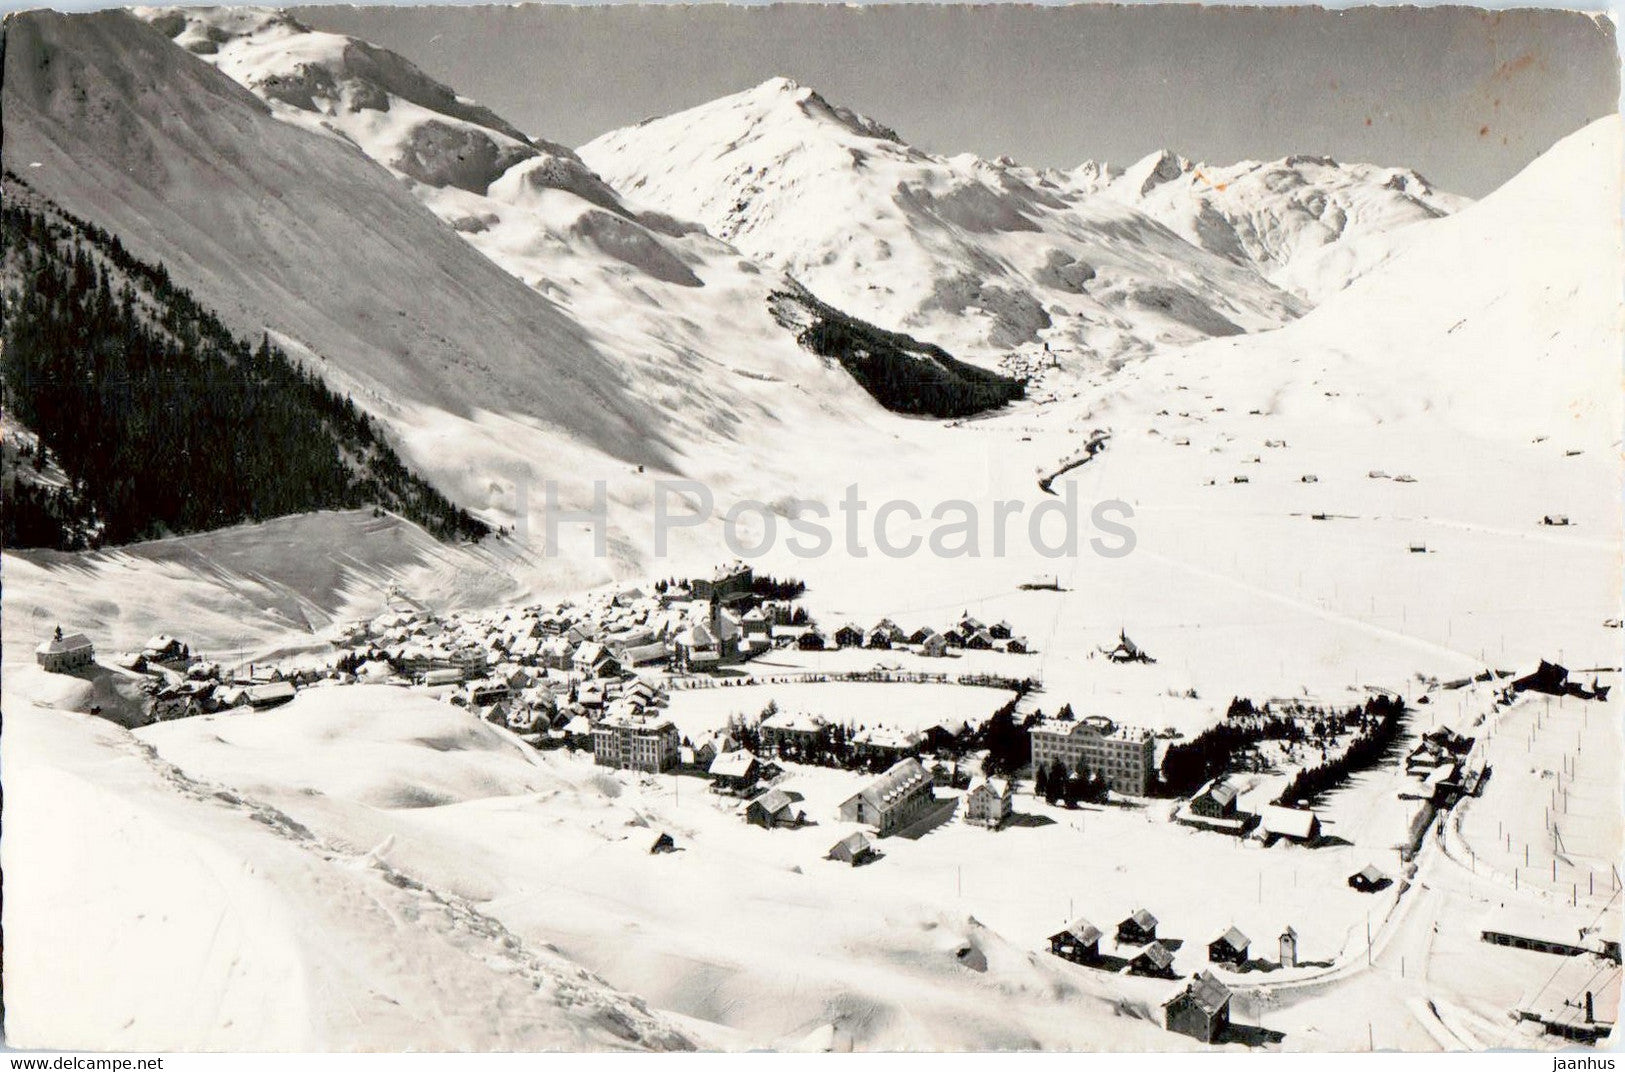 Andermatt 1444 m gegen Furka - 3342 - Feldpost - military mail - old postcard - Switzerland - used - JH Postcards